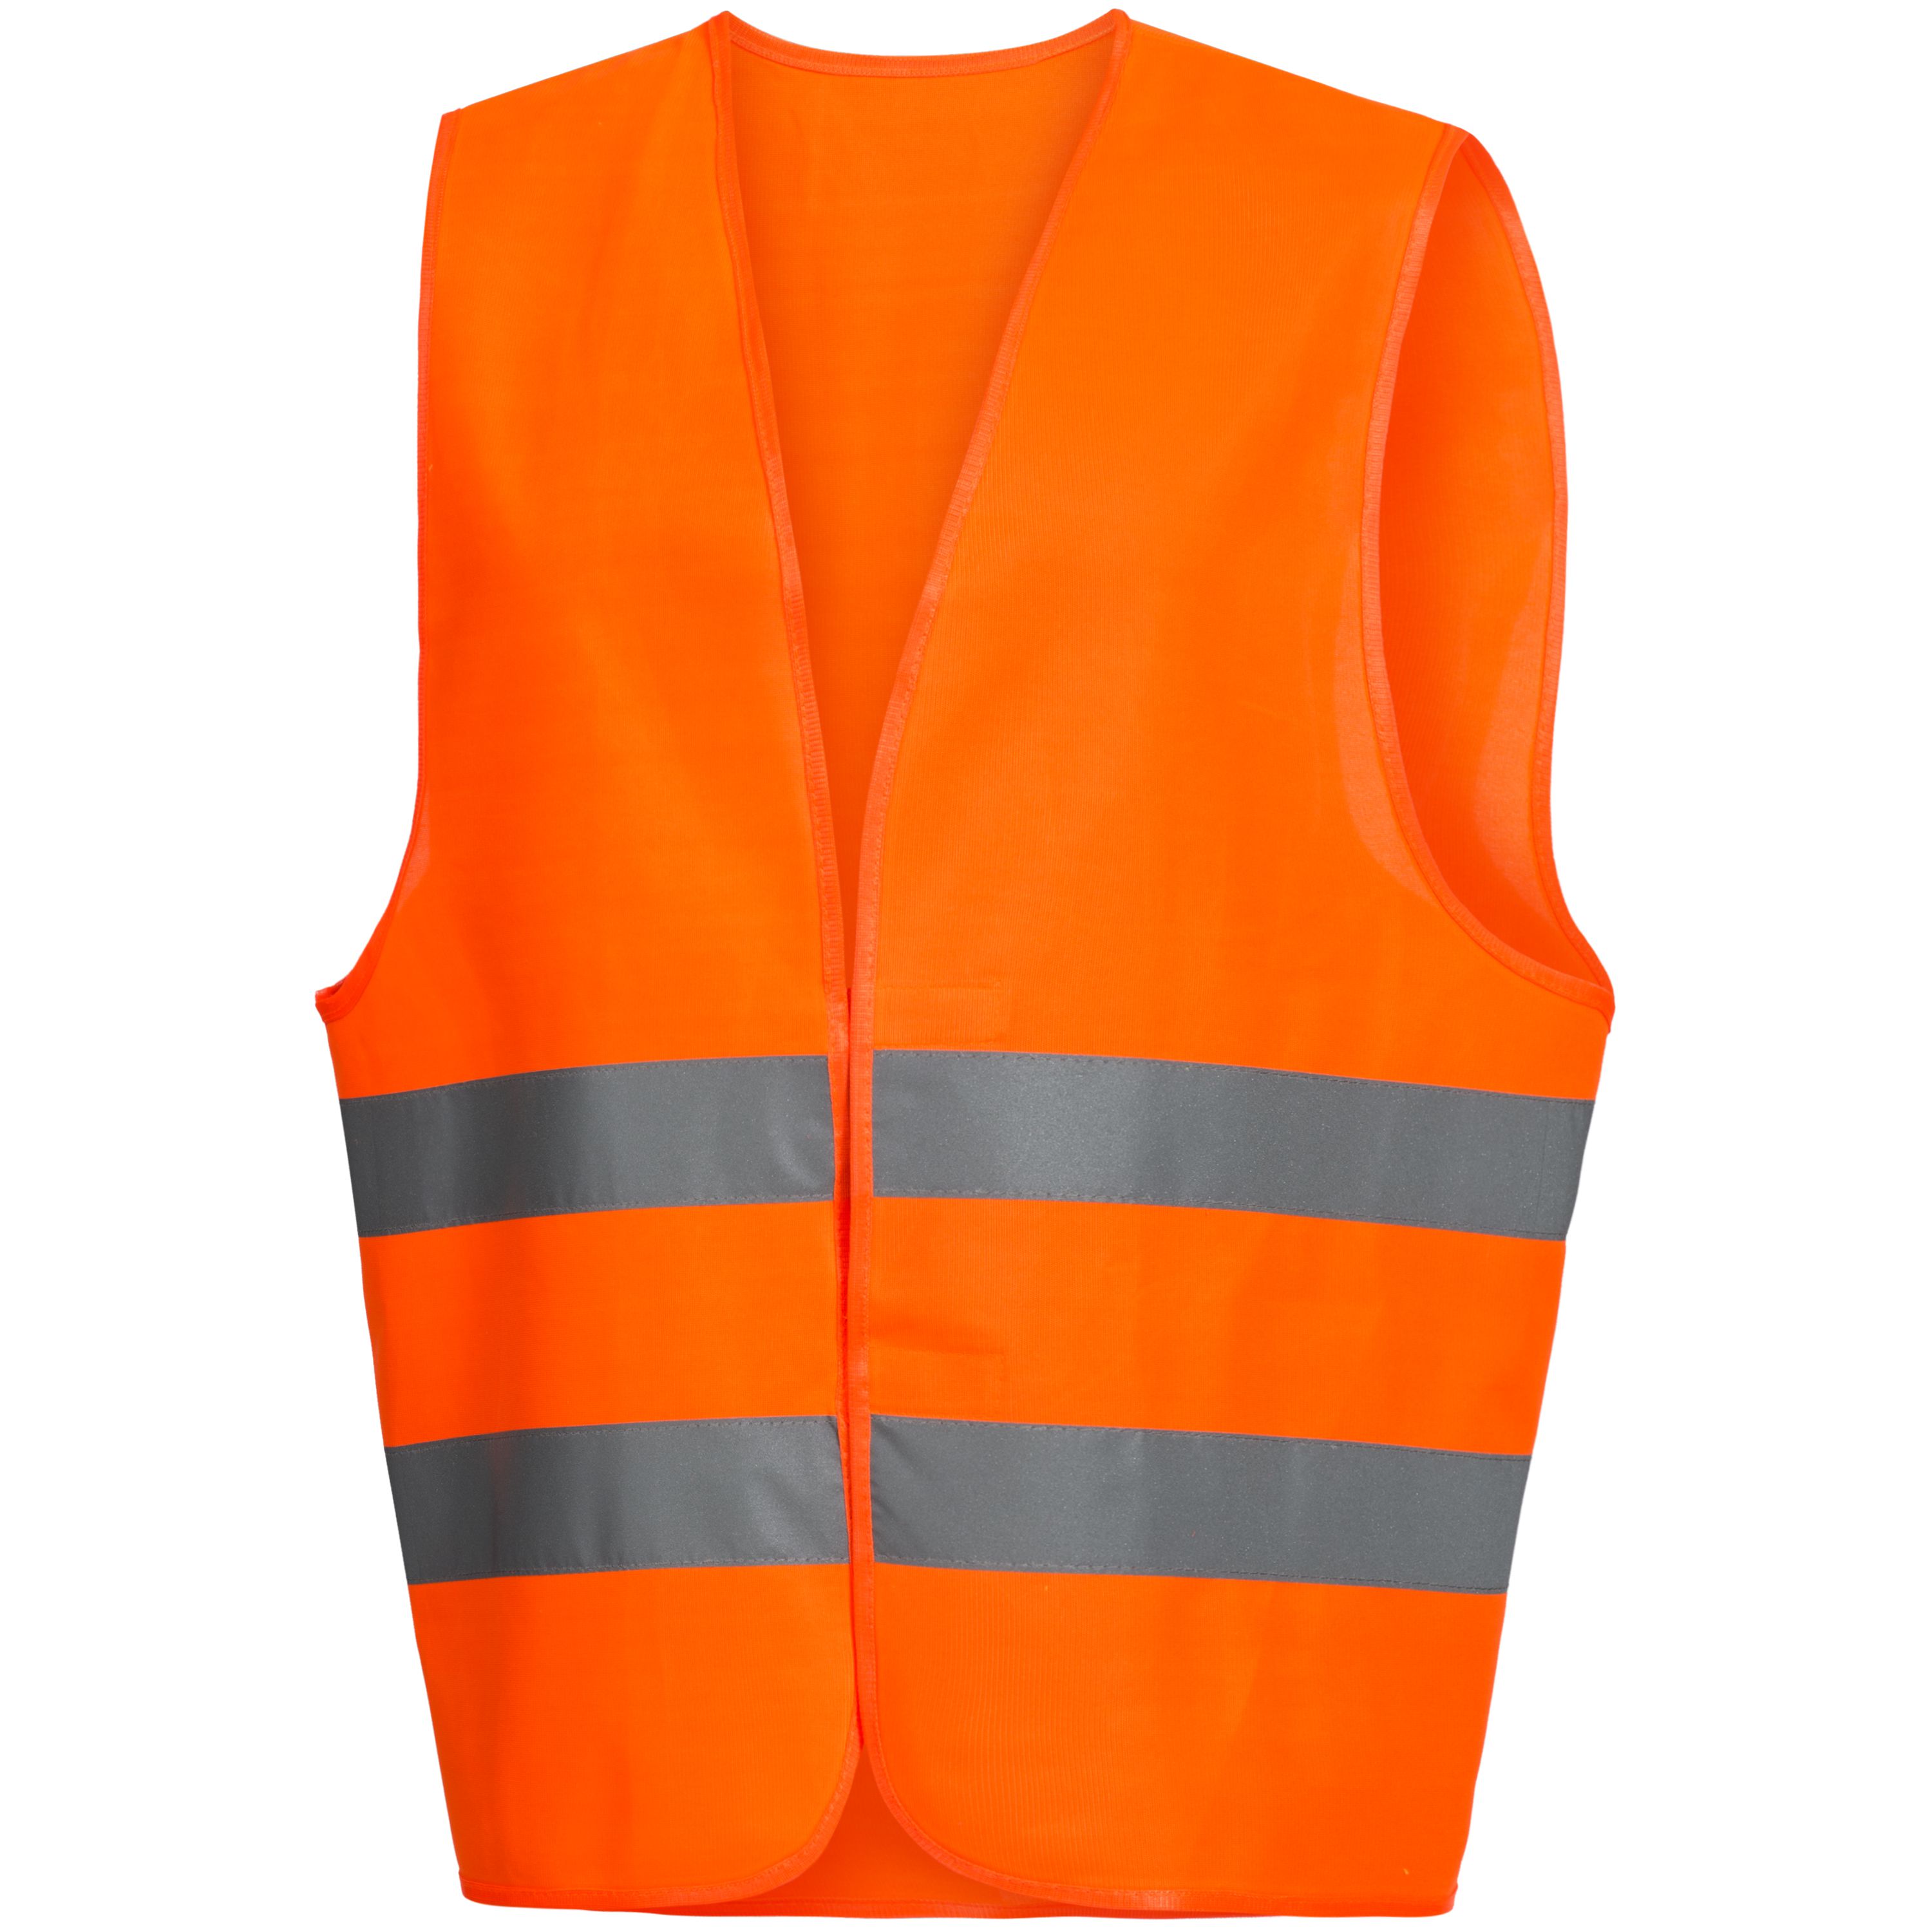 NITRAS MOTION TEX VIZ 7110 high-visibility waistcoat - lightweight waistcoat in high-visibility colour for work - neon orange - M